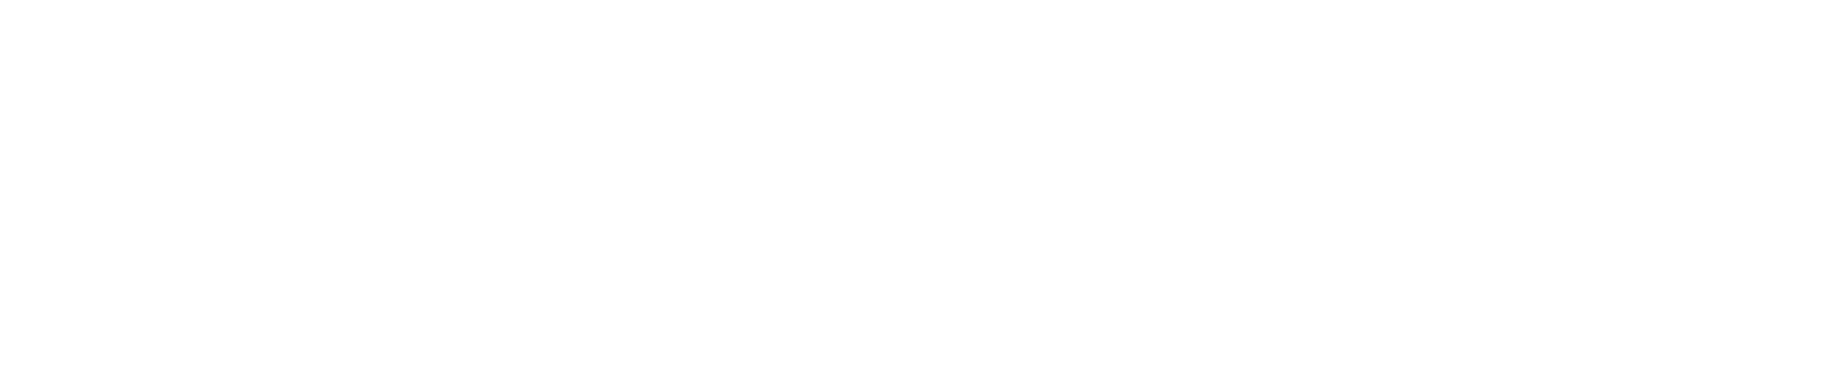 Airborne Technologies Logo